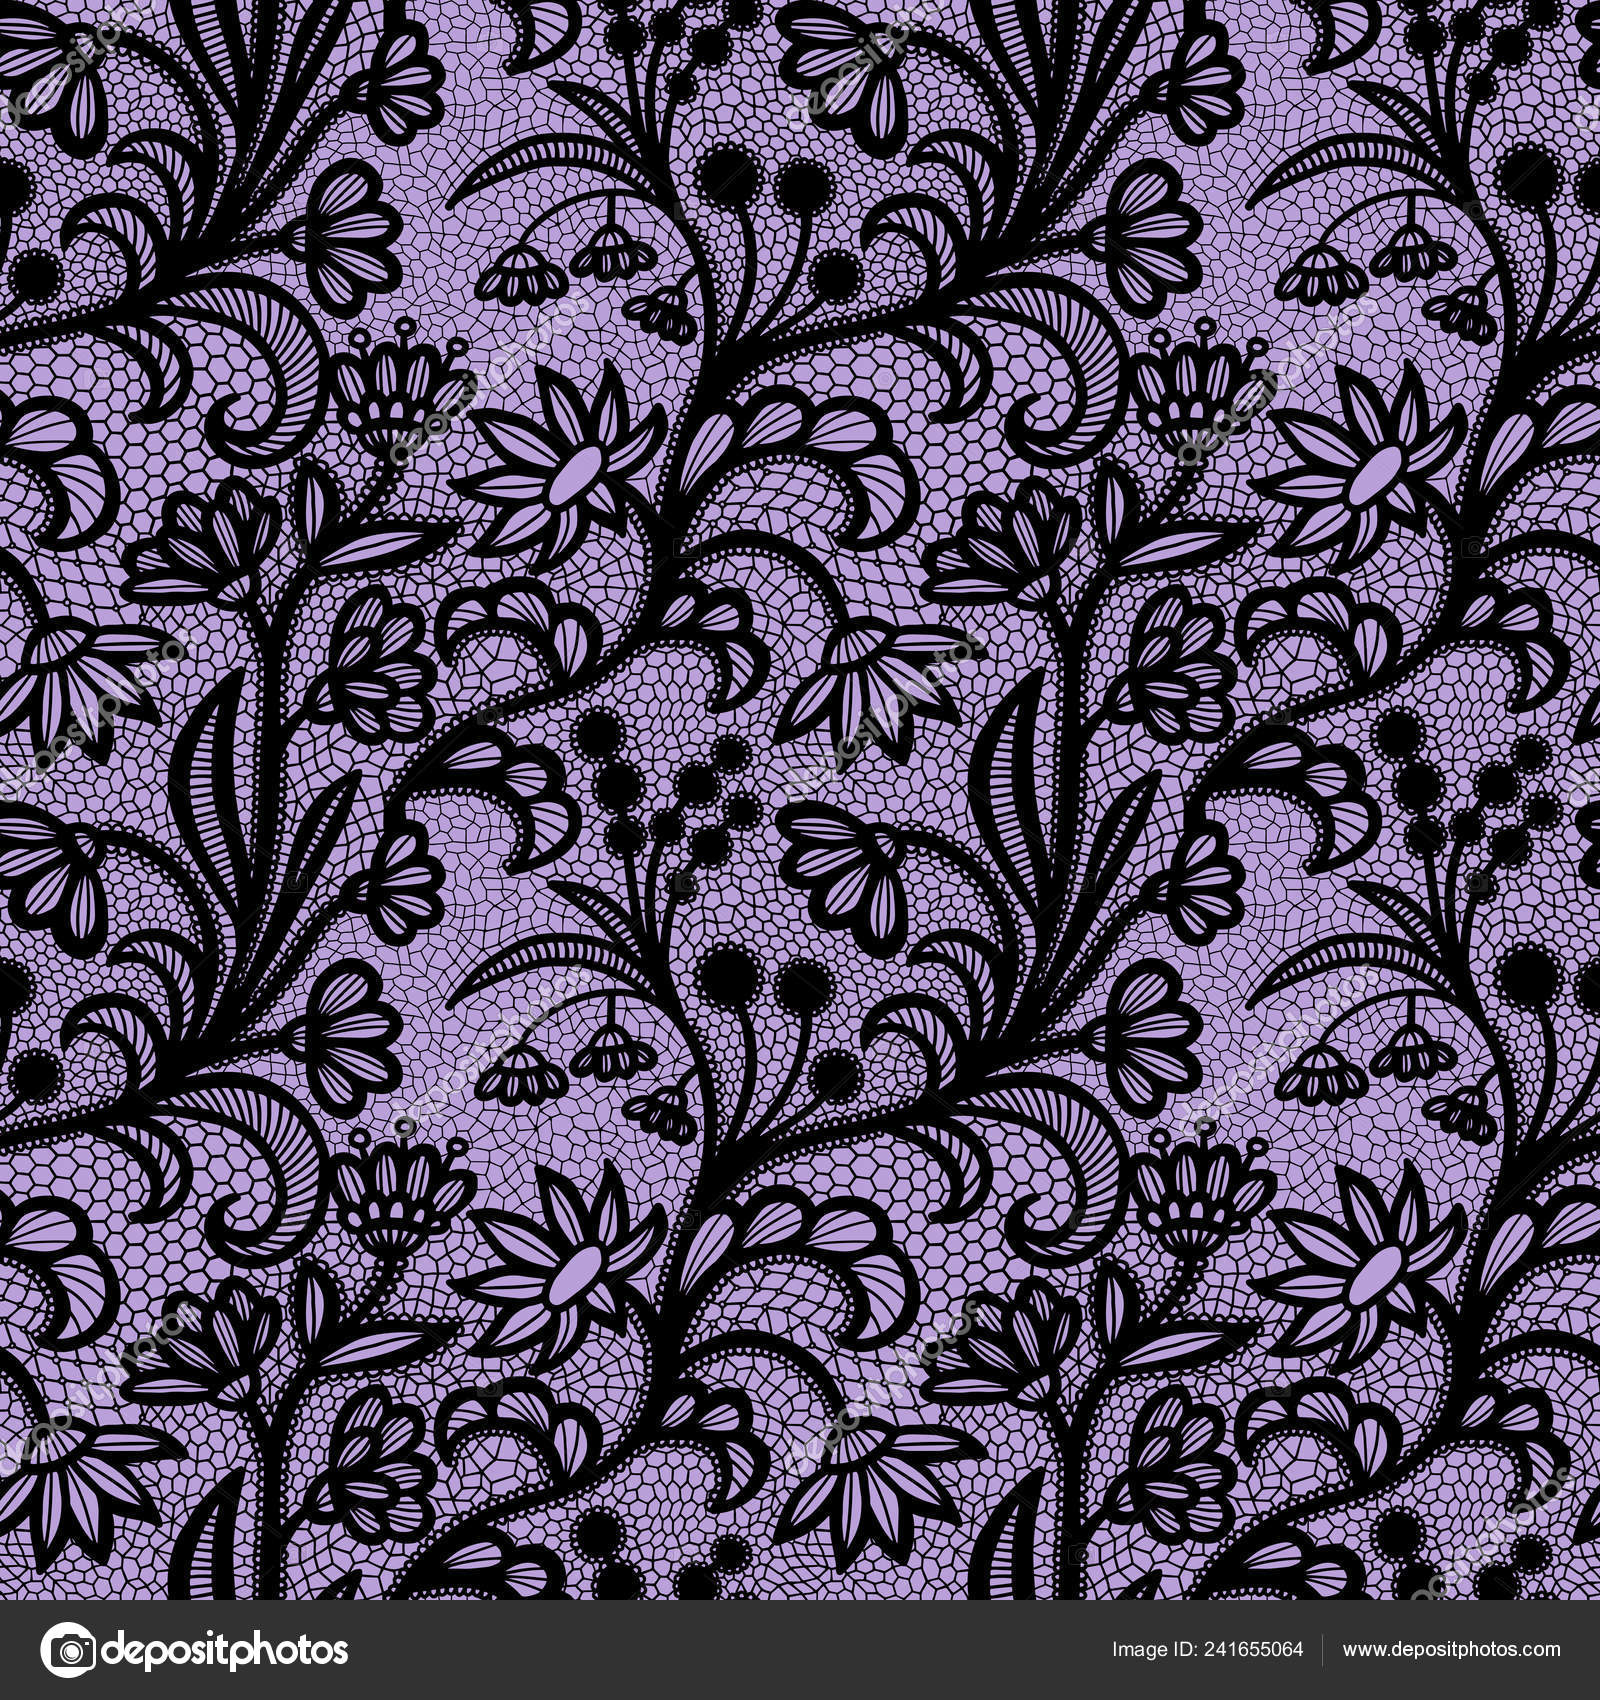 https://st4.depositphotos.com/1177537/24165/v/1600/depositphotos_241655064-stock-illustration-lace-black-seamless-pattern-flowers.jpg